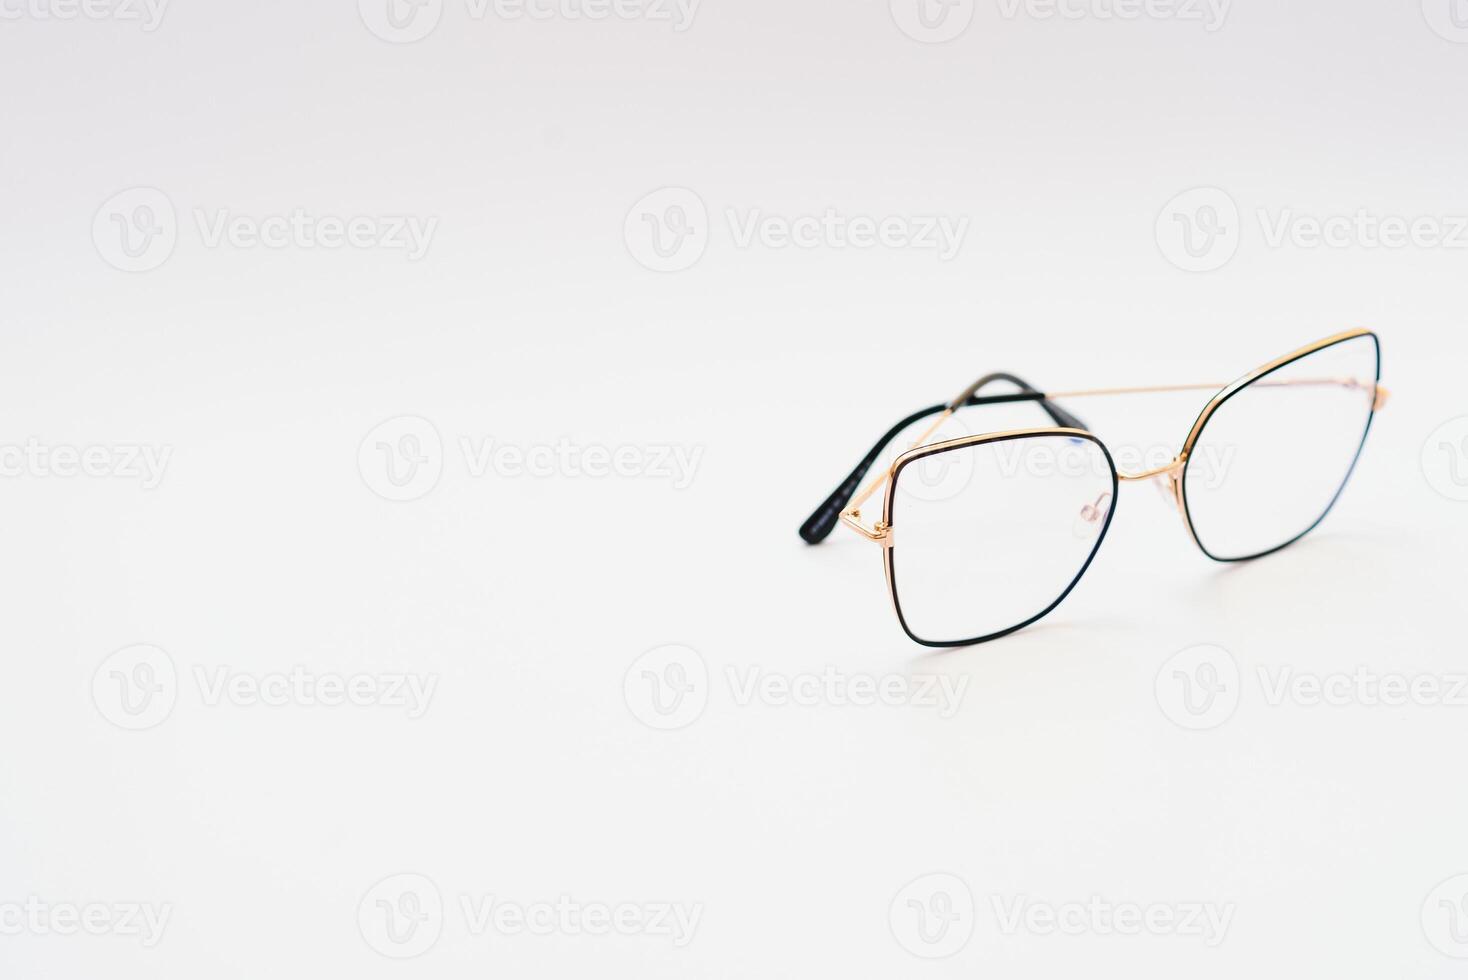 Preto Óculos com branco fundo foto